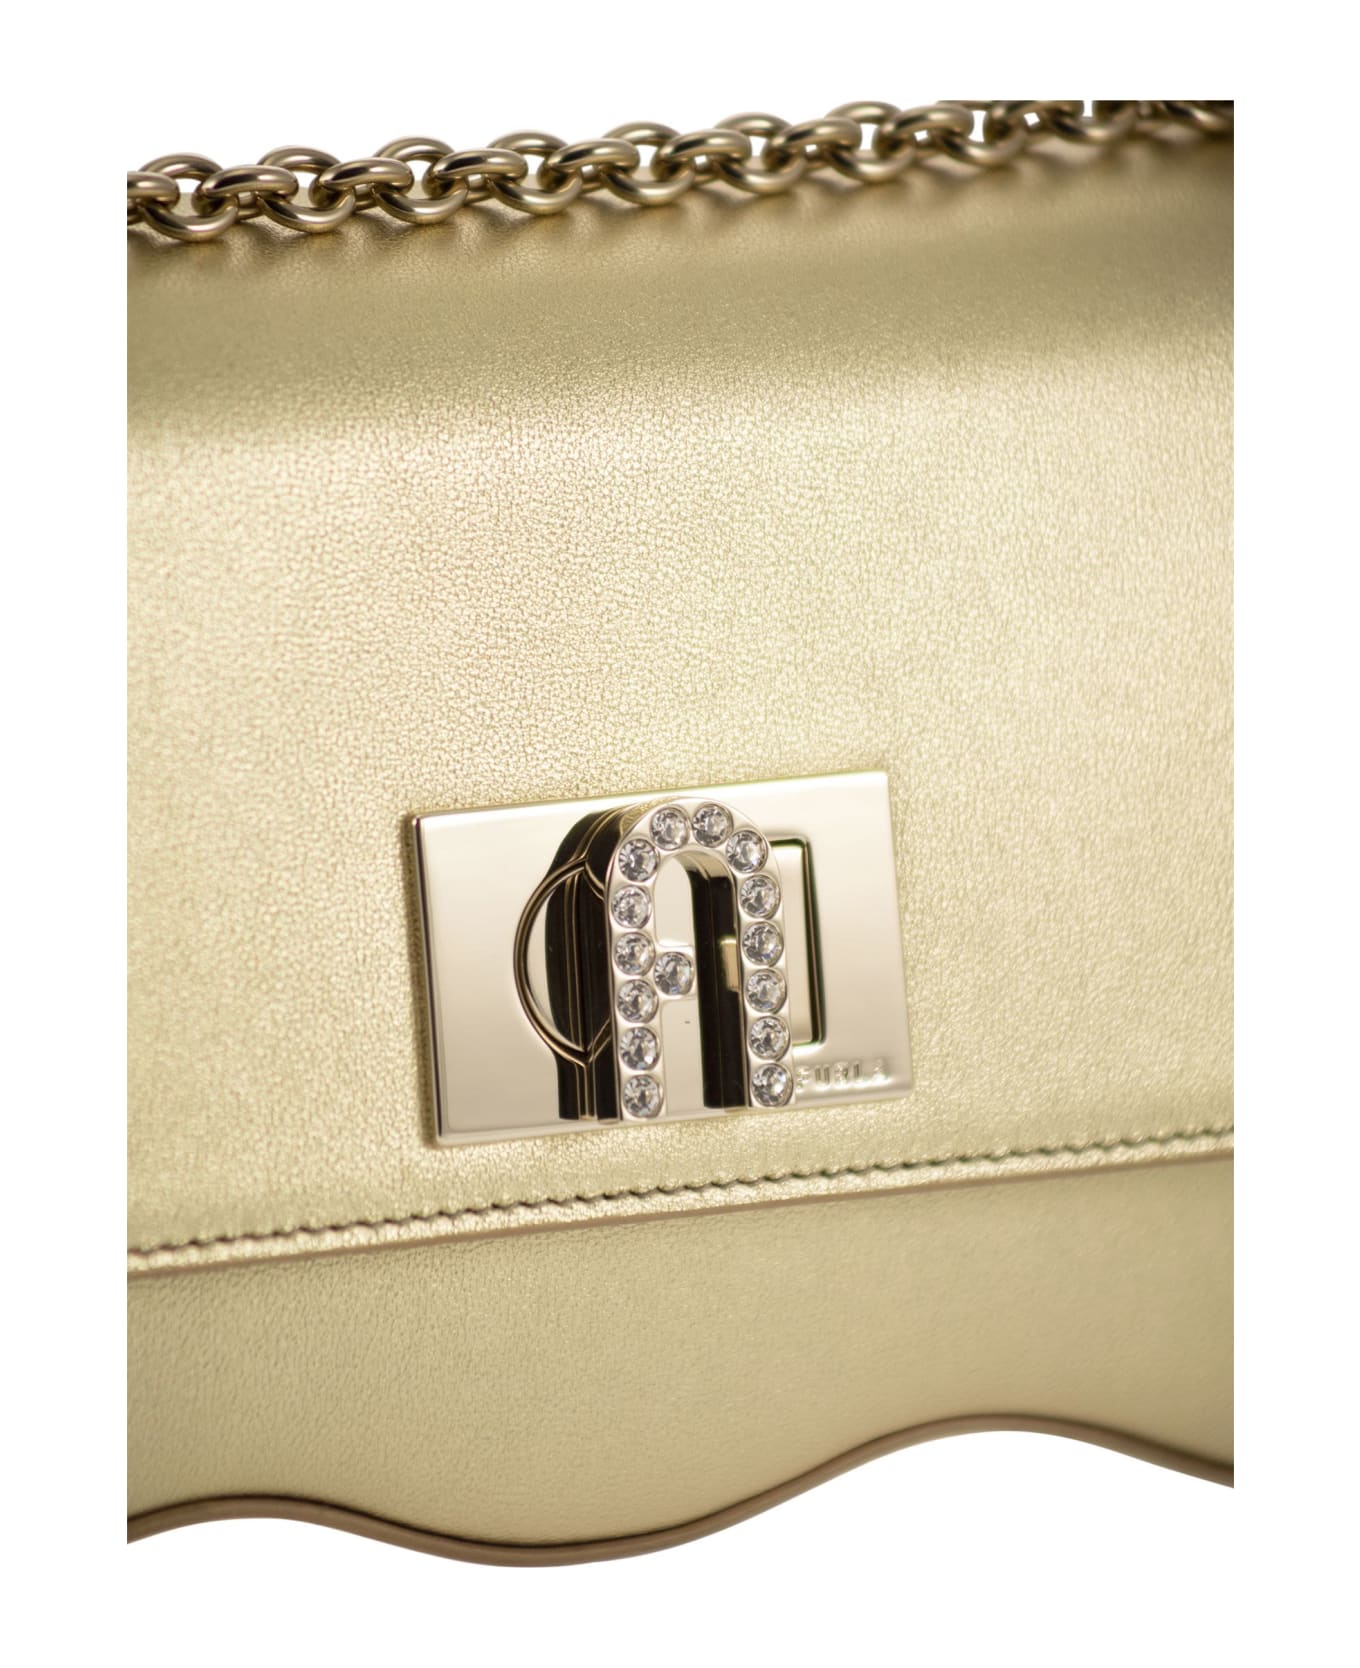 Furla 'furla 1927' Gold Calf Leather Bag - Gold トートバッグ